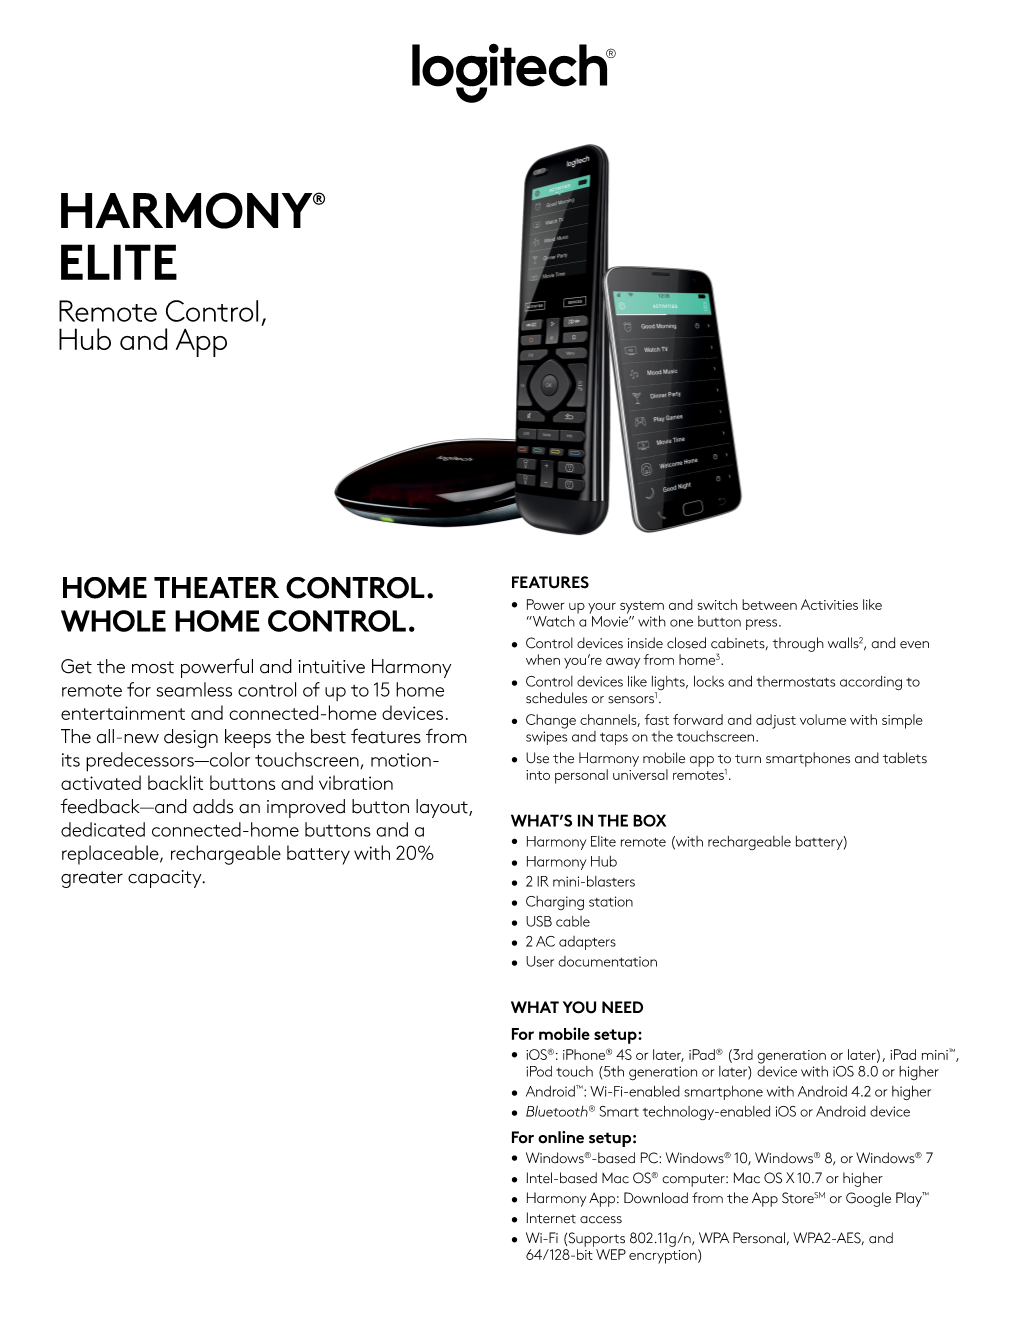 HARMONY® ELITE Remote Control, Hub and App